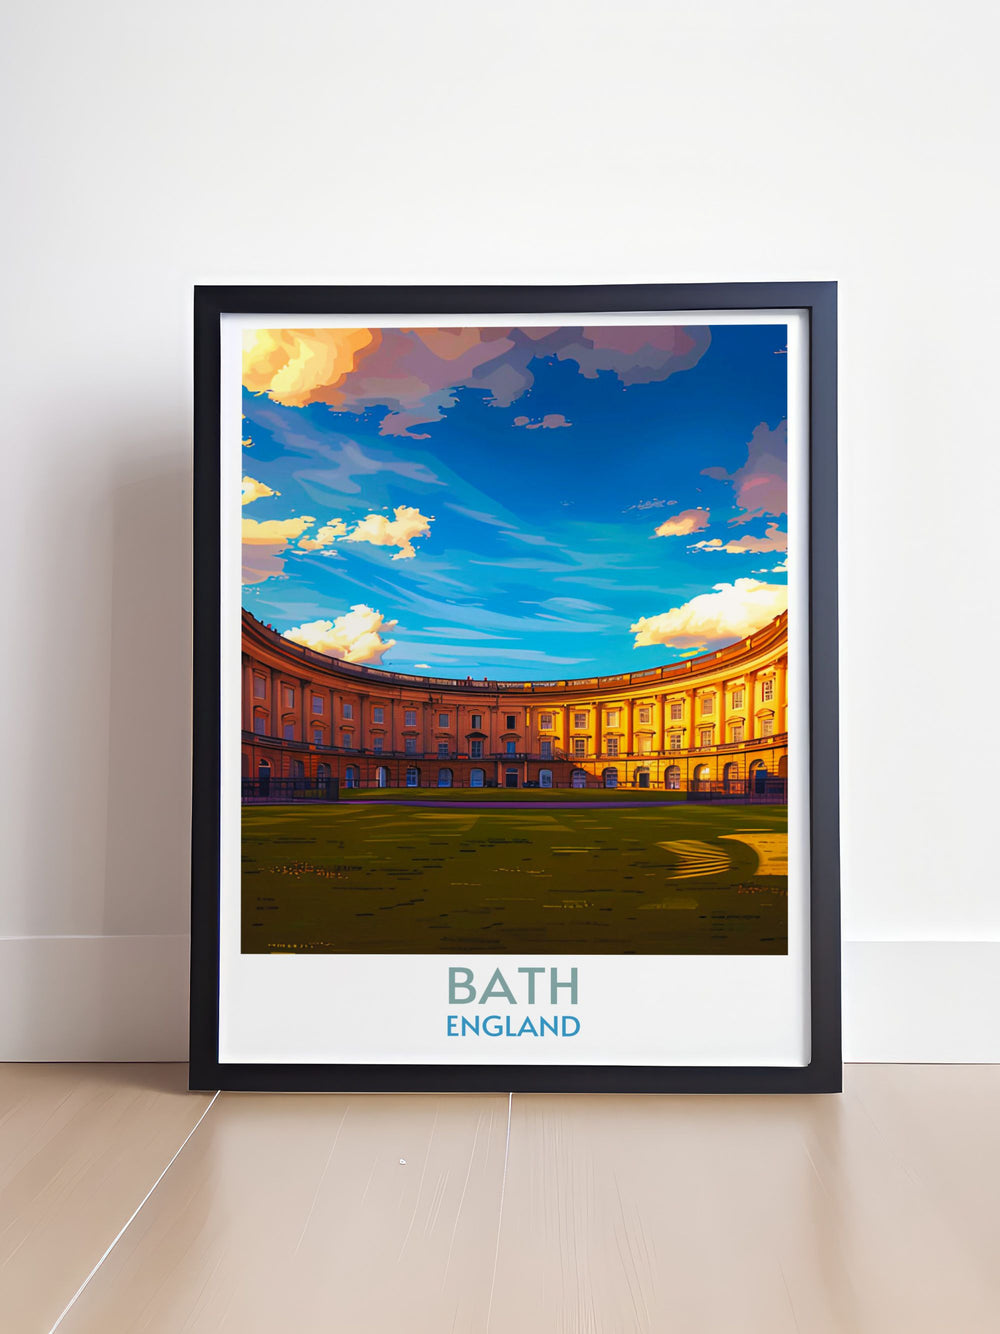 Royal Crescent, Bath artwork, designed to evoke the elegance and history of English travel destinations.